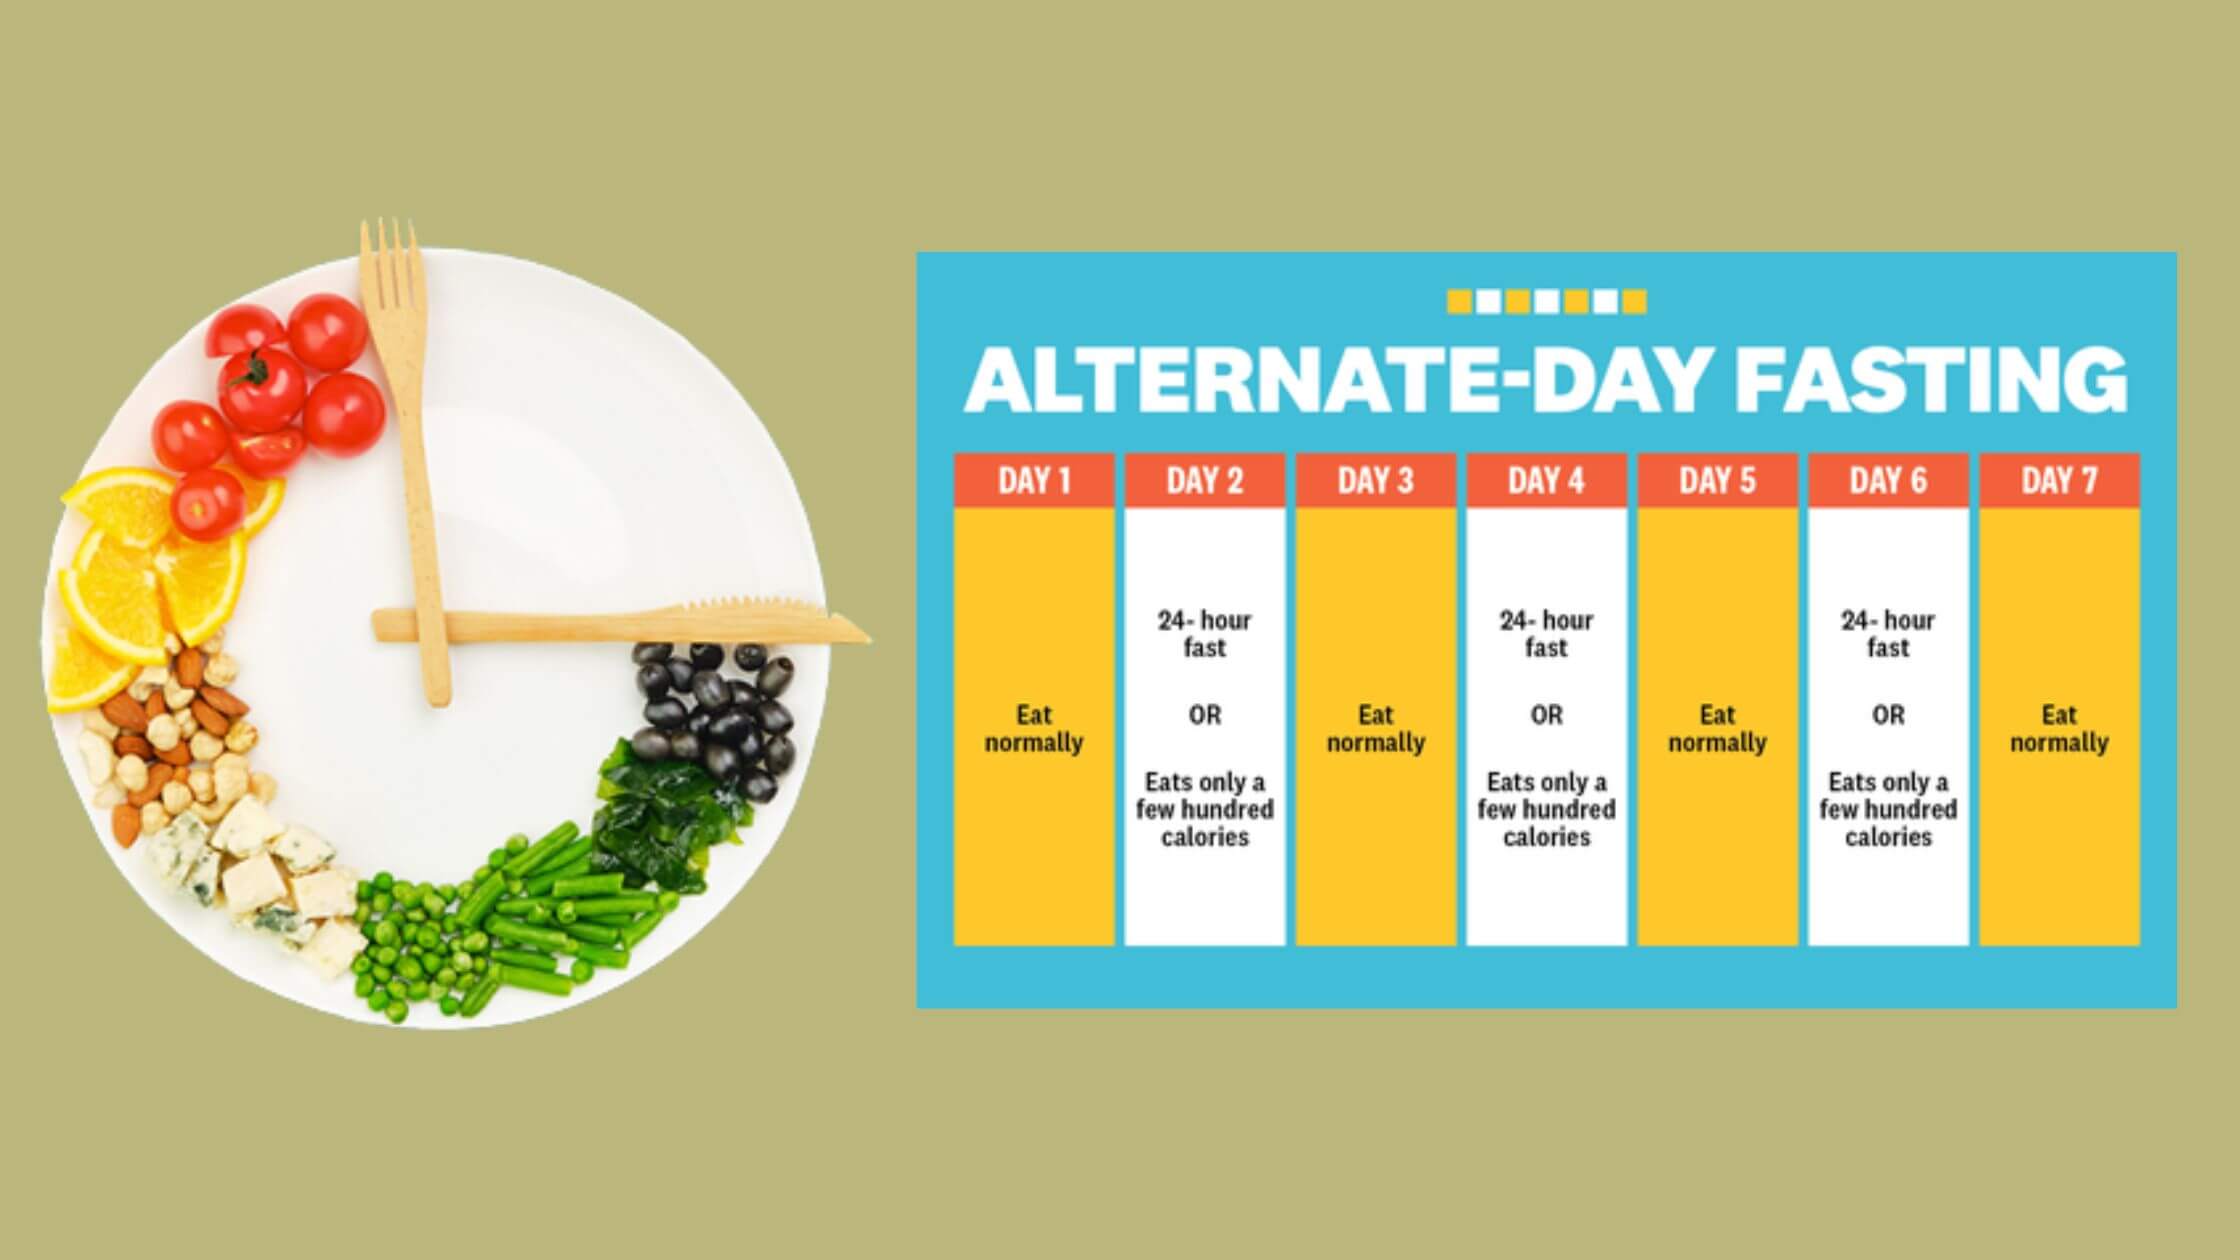 Fasting on alternate days